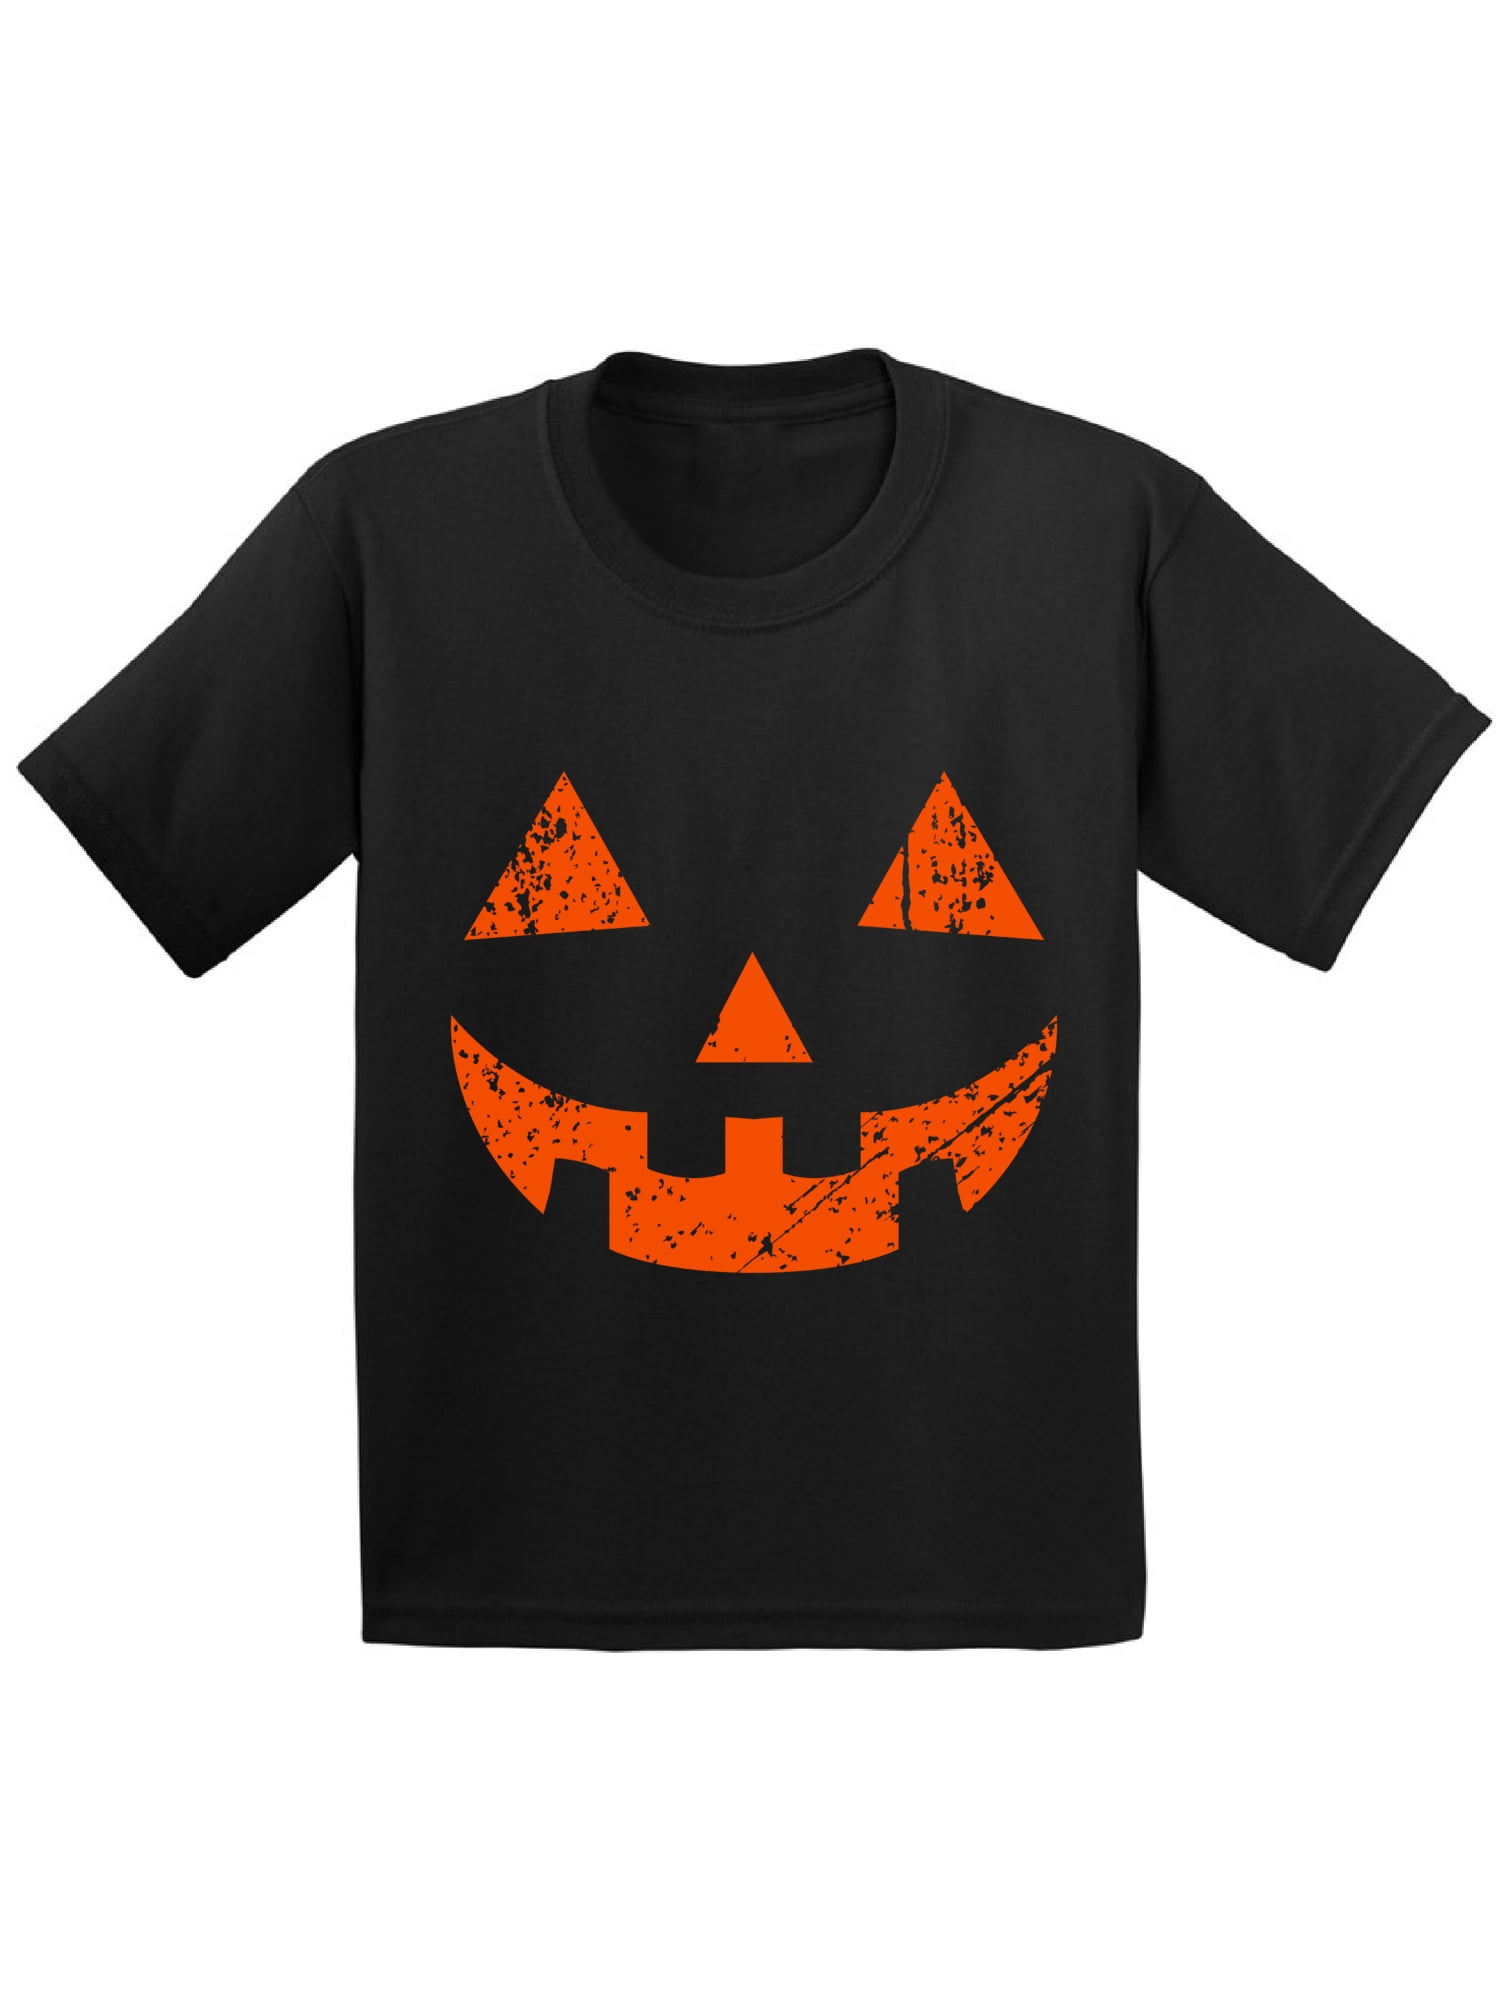 Skeleton Hands Shirt Halloween Shirt,Halloween Shirt for Woman,Funny Halloween Shirt,Hand Bra Shirt,Trick or Treat Shirt,Halloween Party